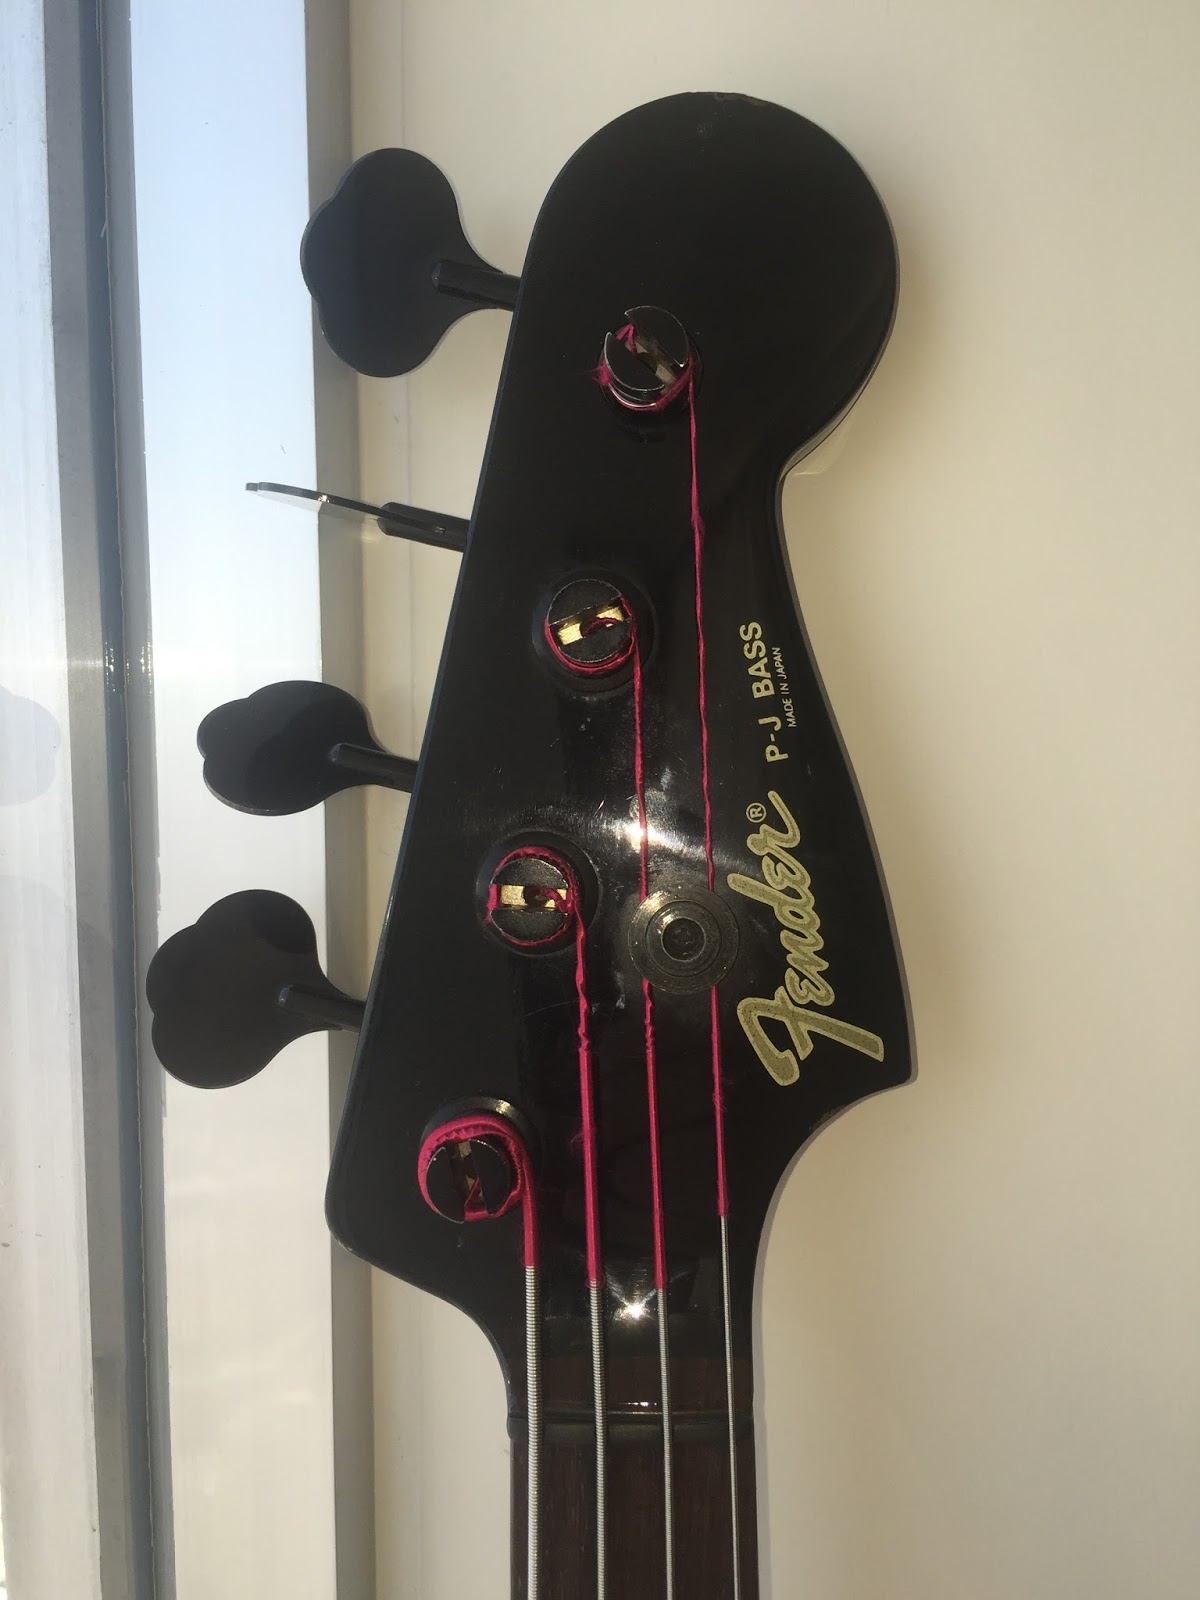 Rex and the Bass: 1985 Fender Japan P-J Bass Guitar Review